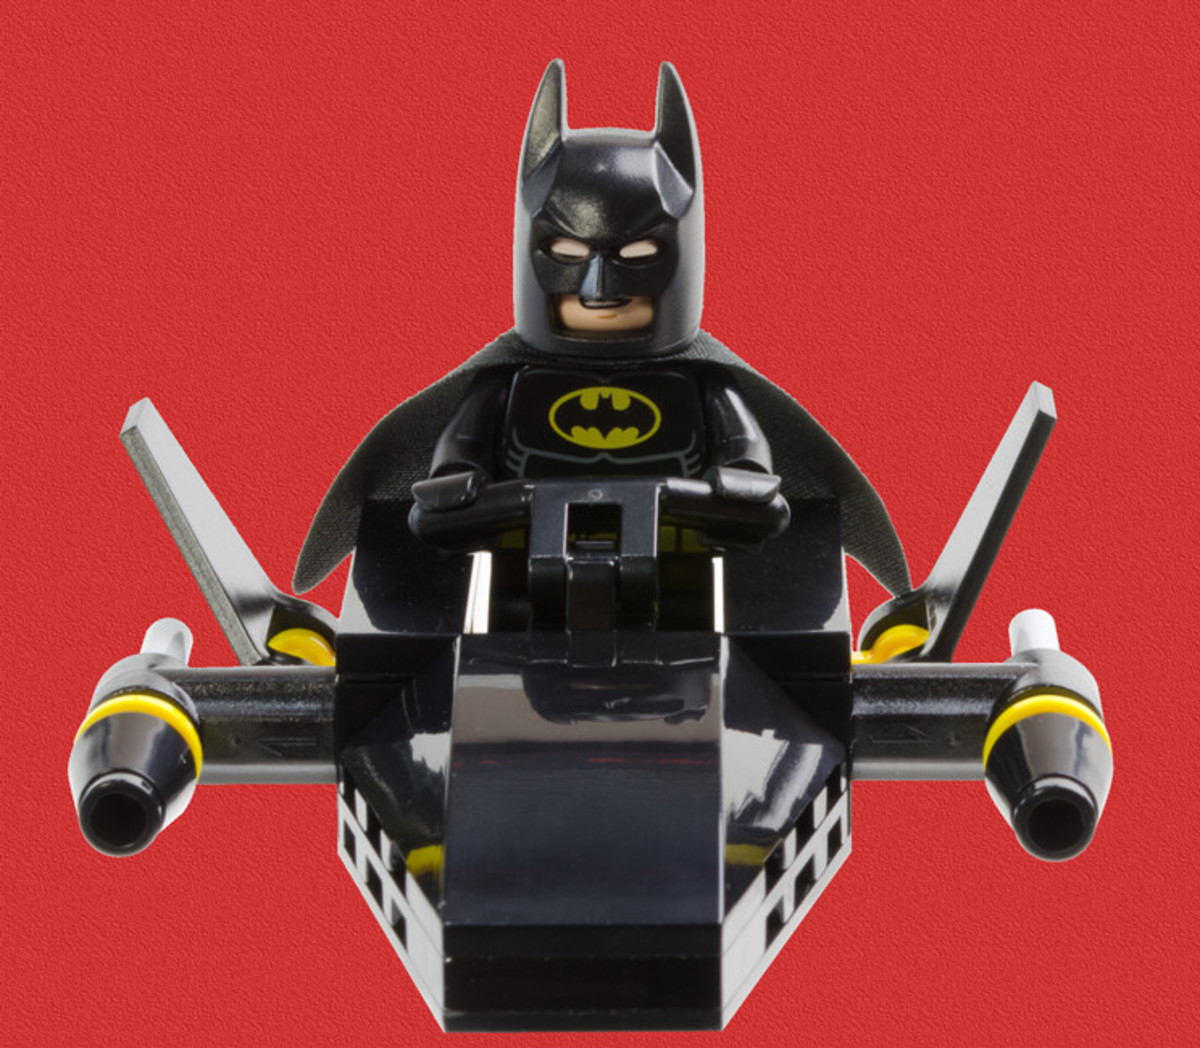 Superhero names for boys and a LEGO Batman. Great combination.